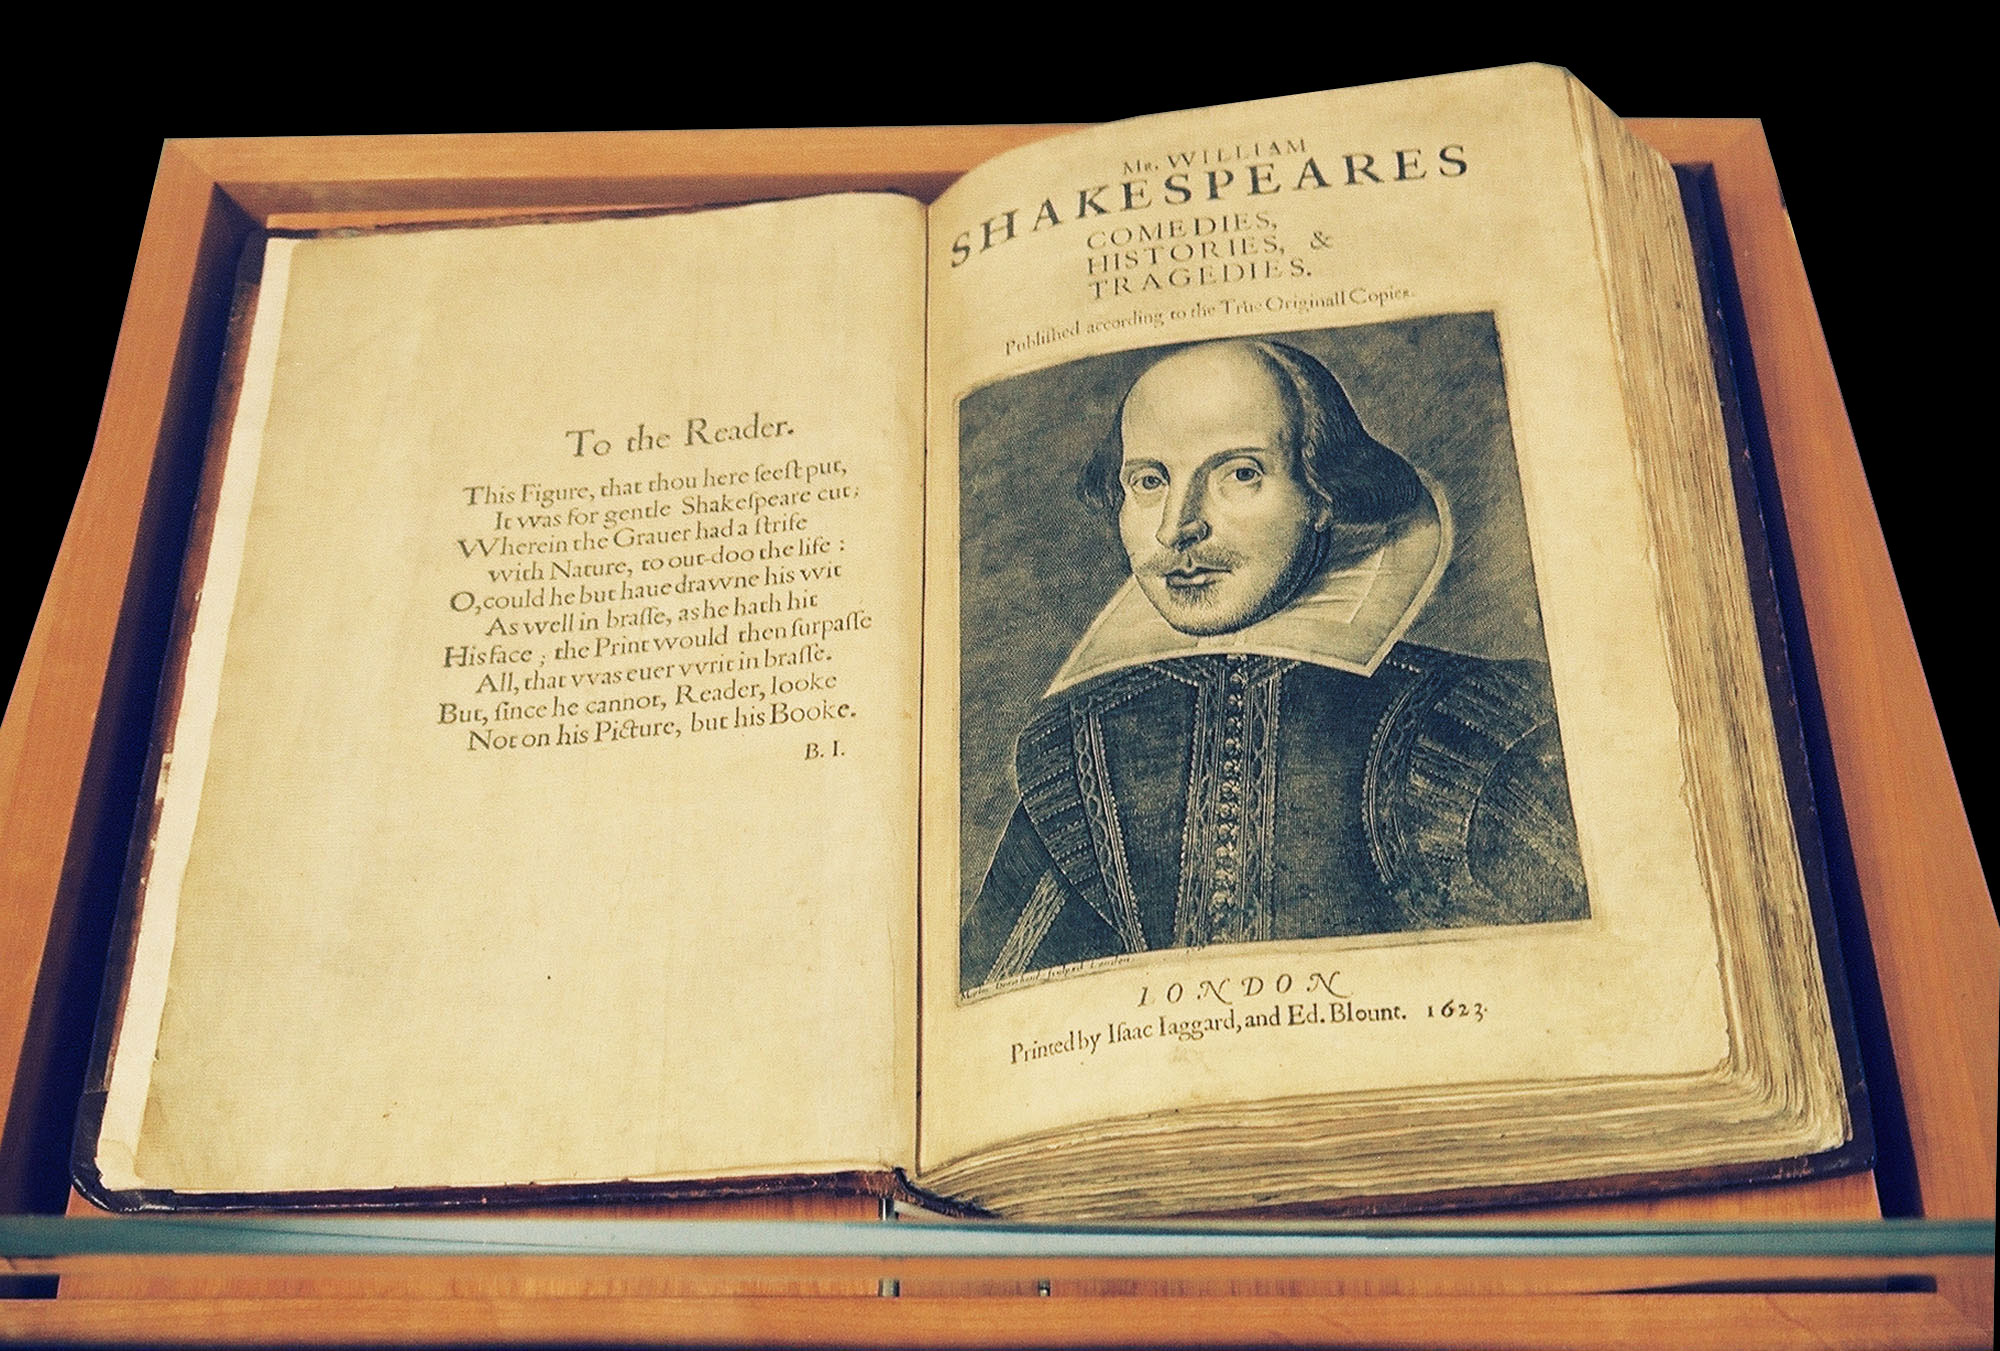 Photograph of Shakespeare manuscript